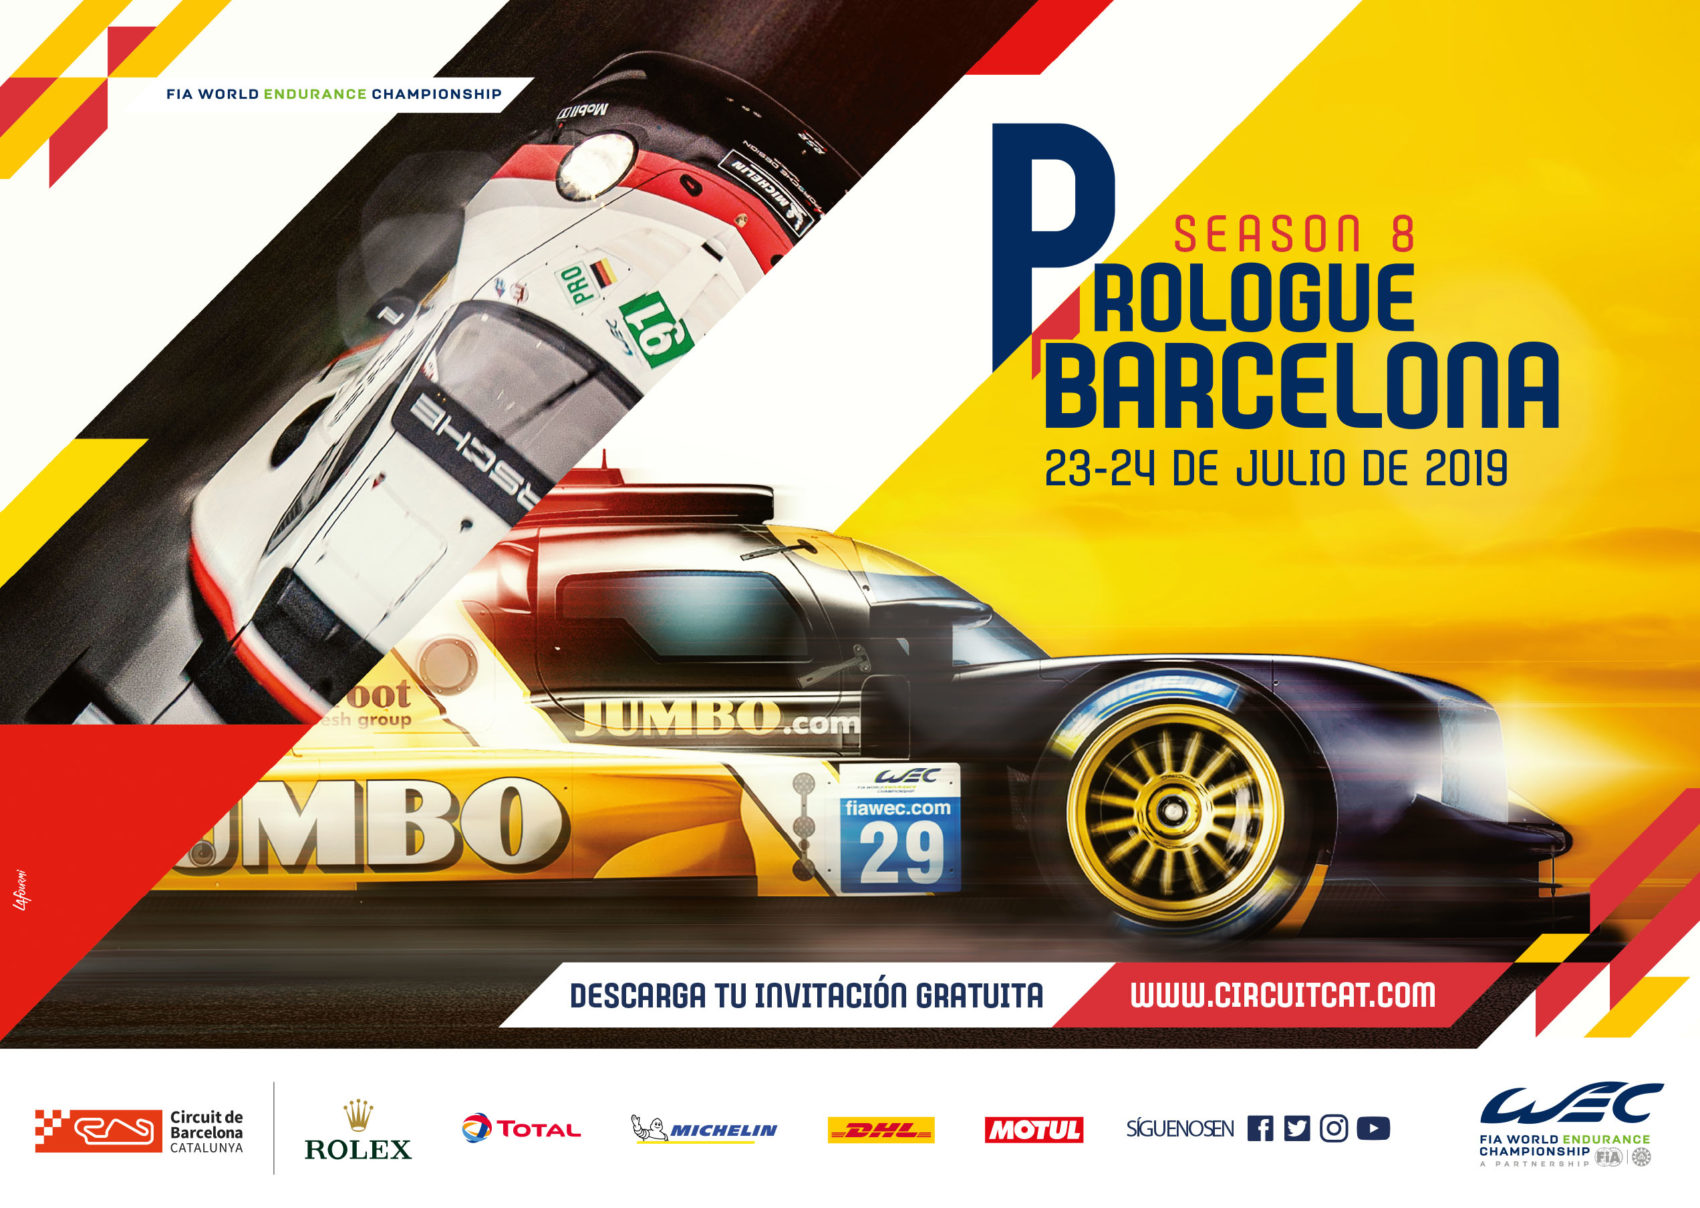 Projet_Project_WEC_FIA_world_endurance_championship_KV_barcelone